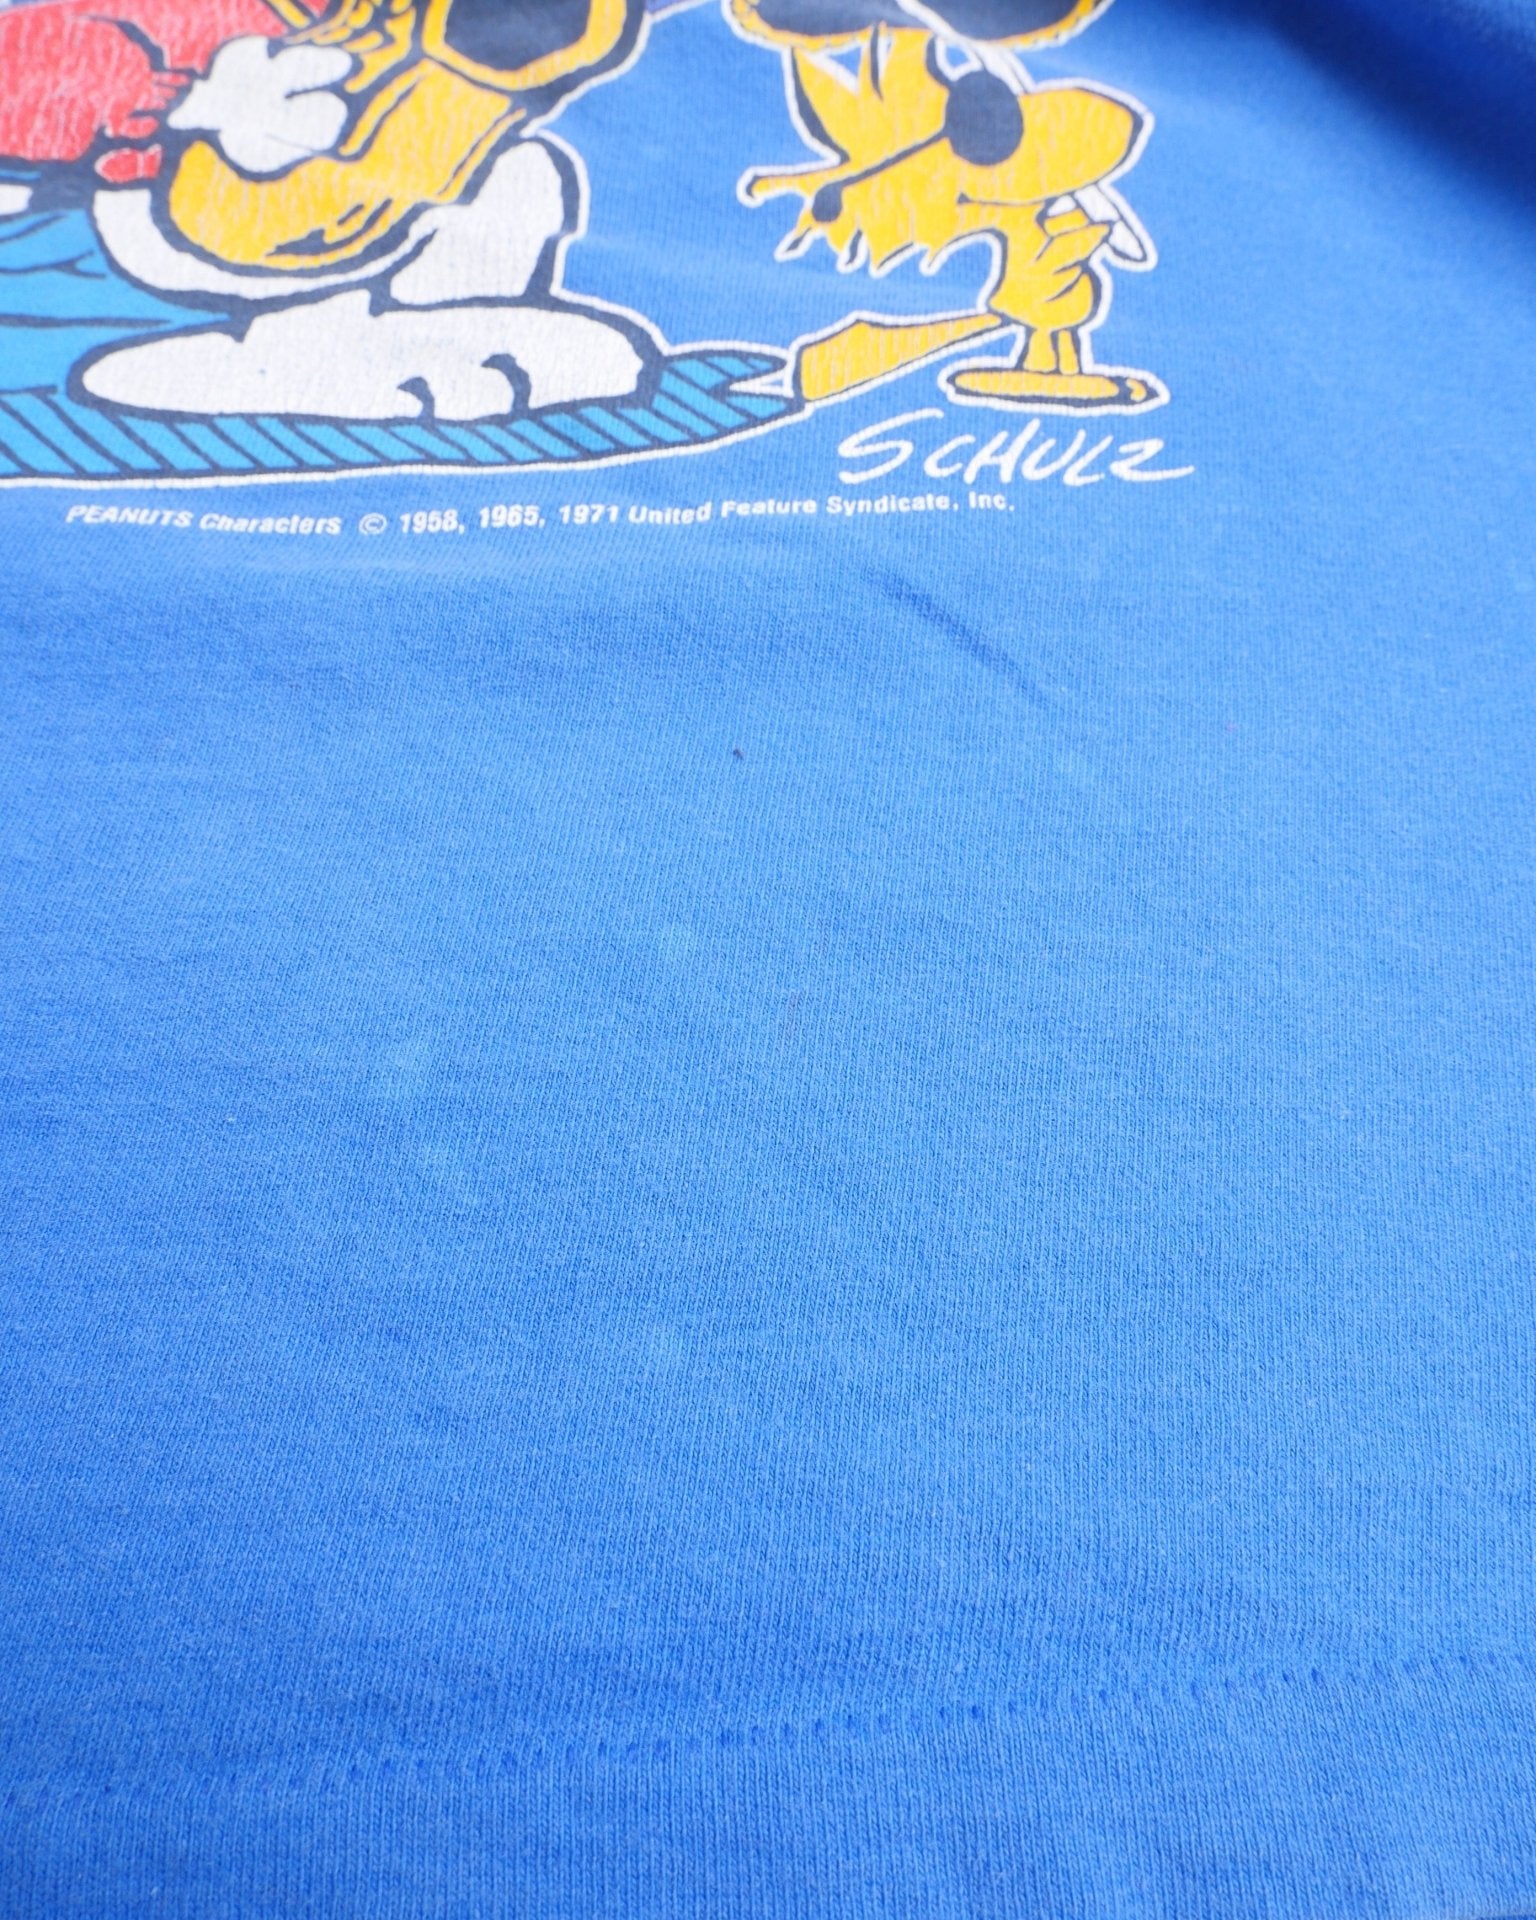 printed Peanuts Vintage washed blue Shirt - Peeces